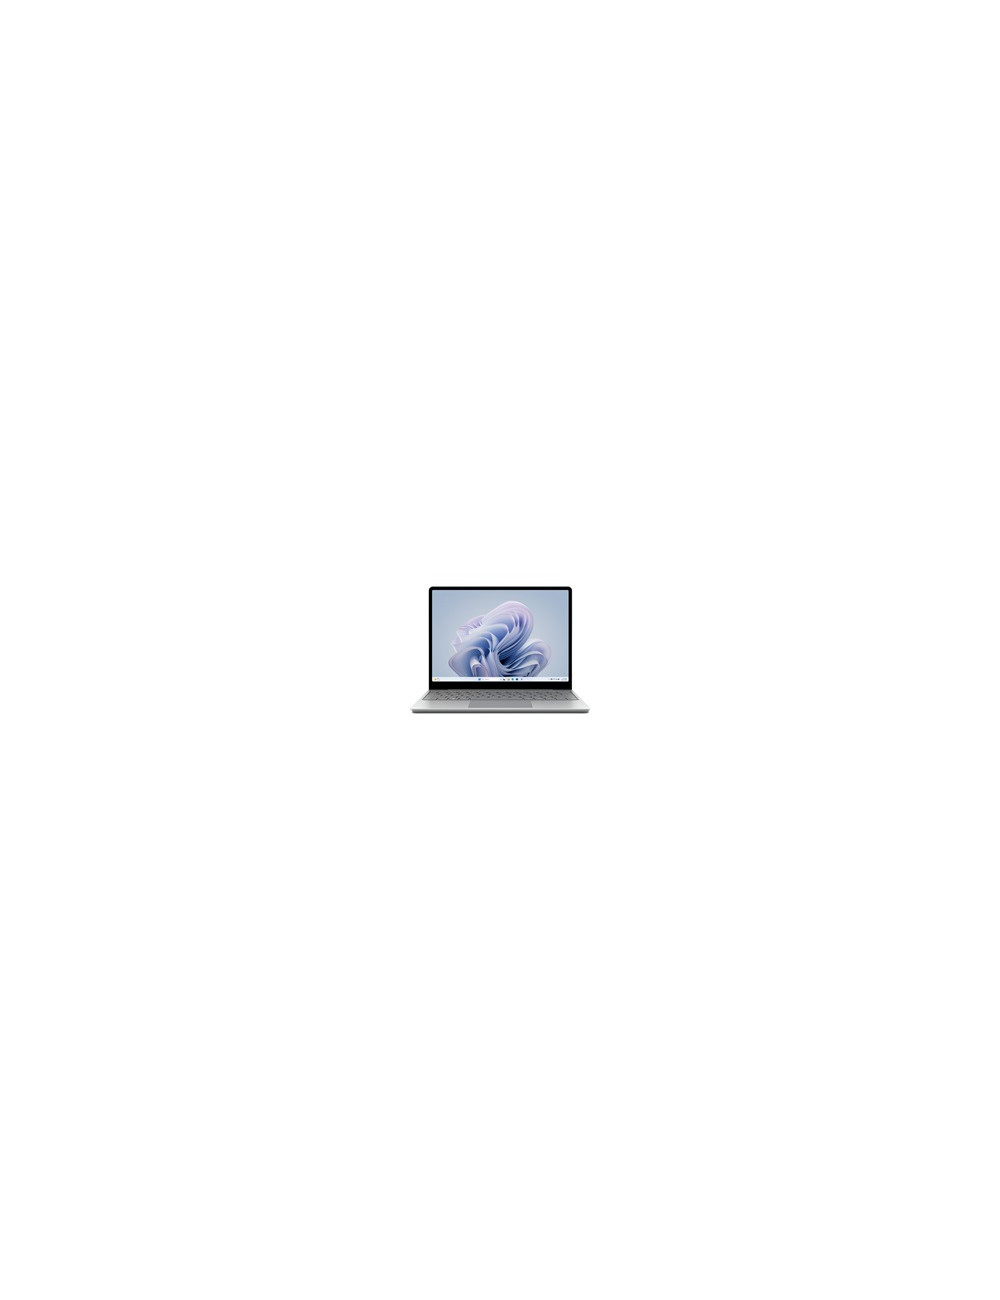 MS Surface Lptp GO 3 i5-1235U 12i 8GB